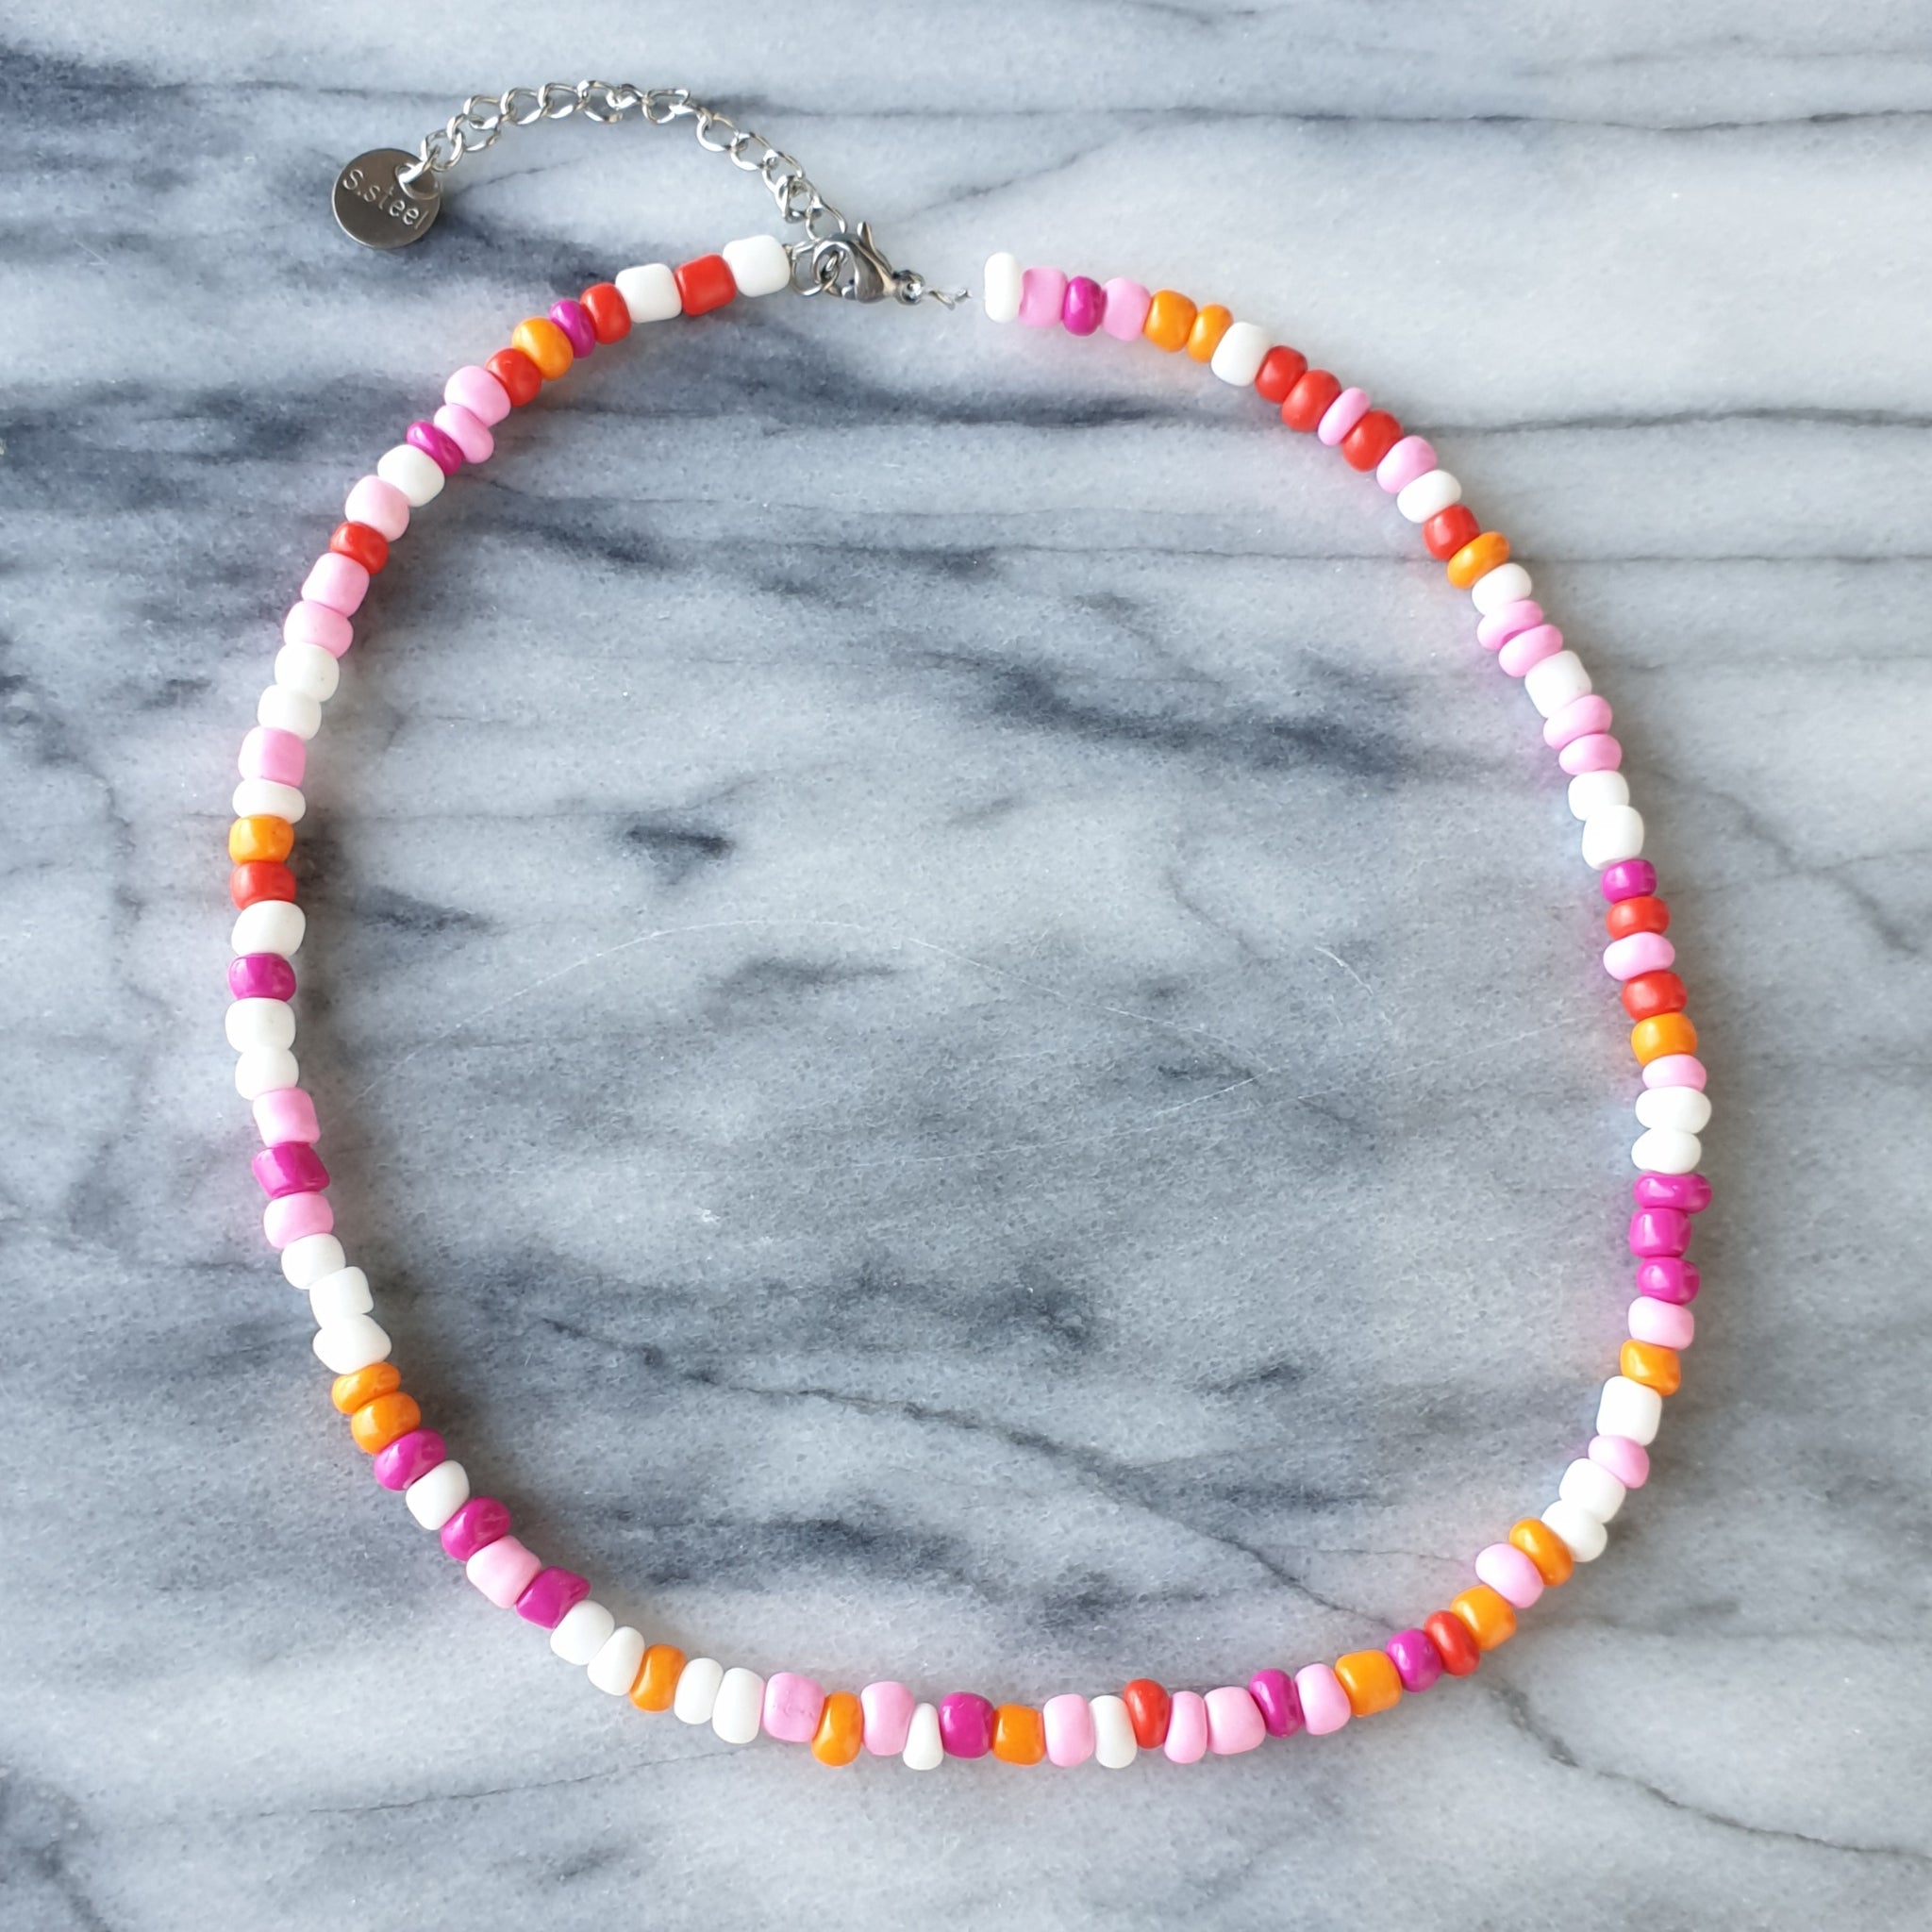 Perlenkette Halskette in rosatöne - große Perlen